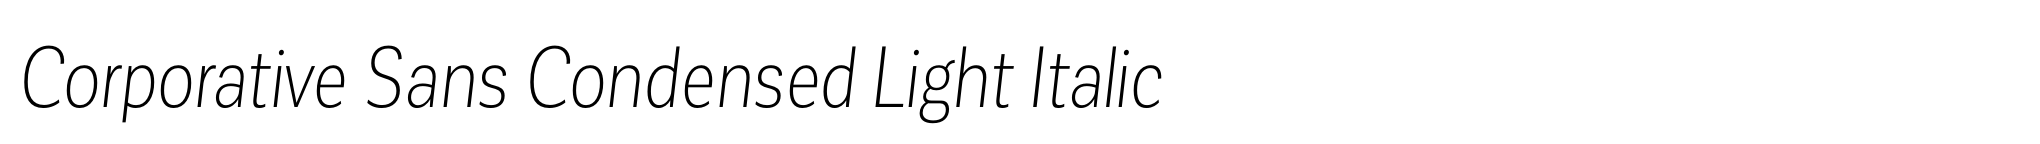 Corporative Sans Condensed Light Italic image